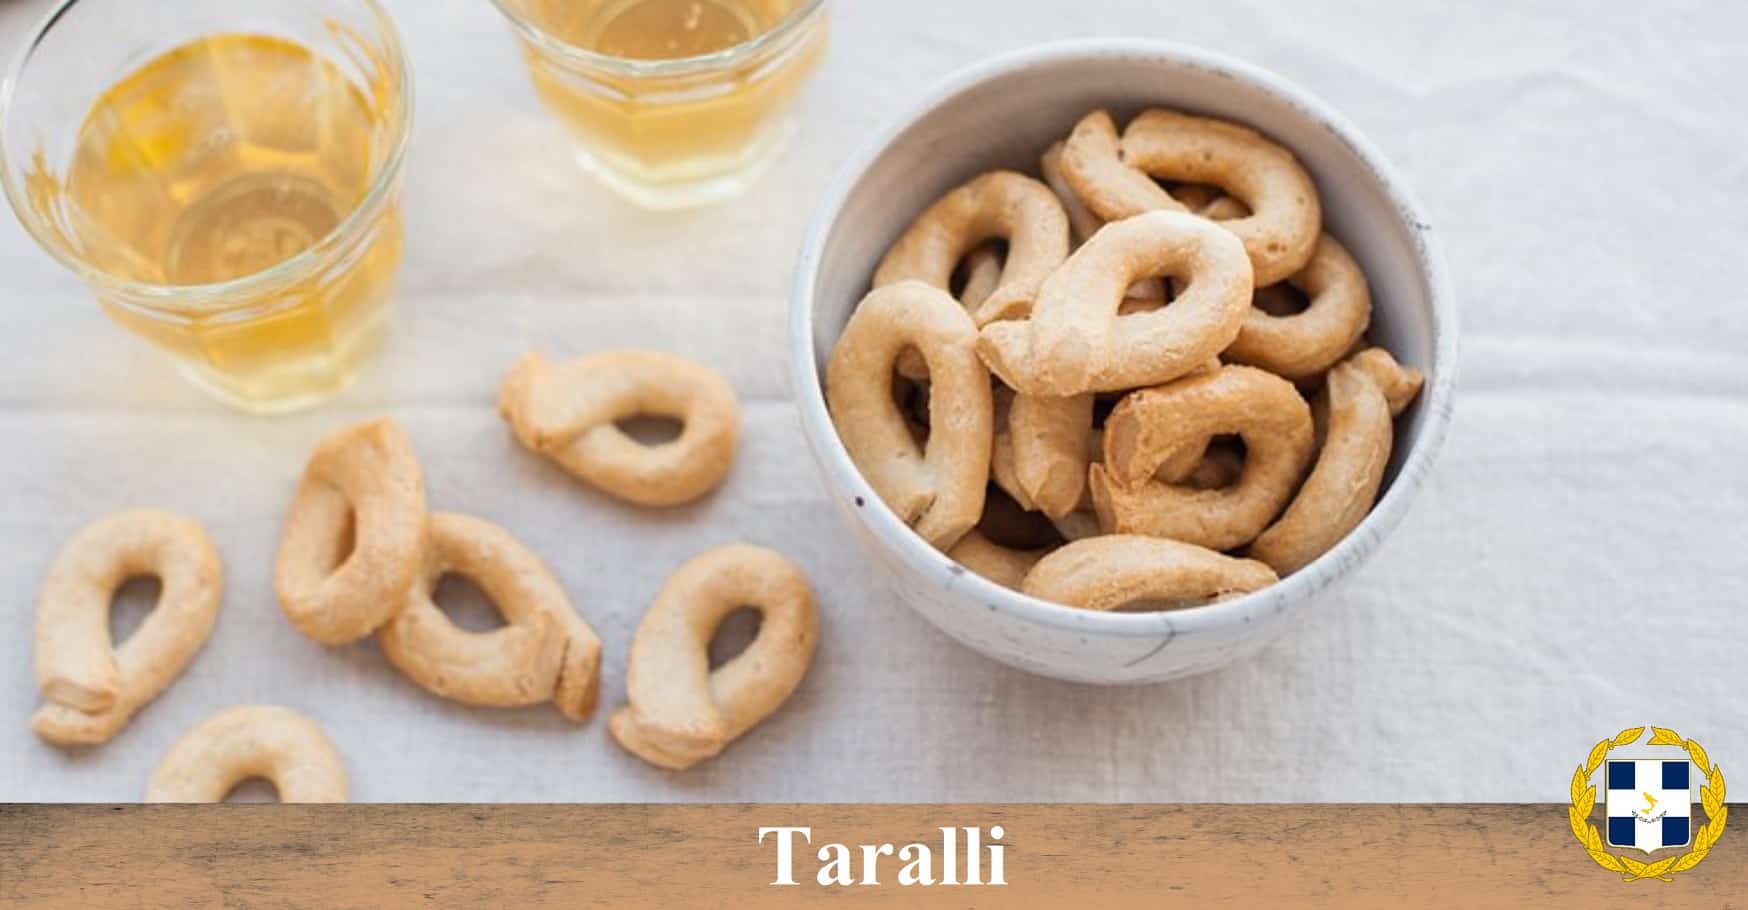 Italiote-Greek Cuisine – Taralli